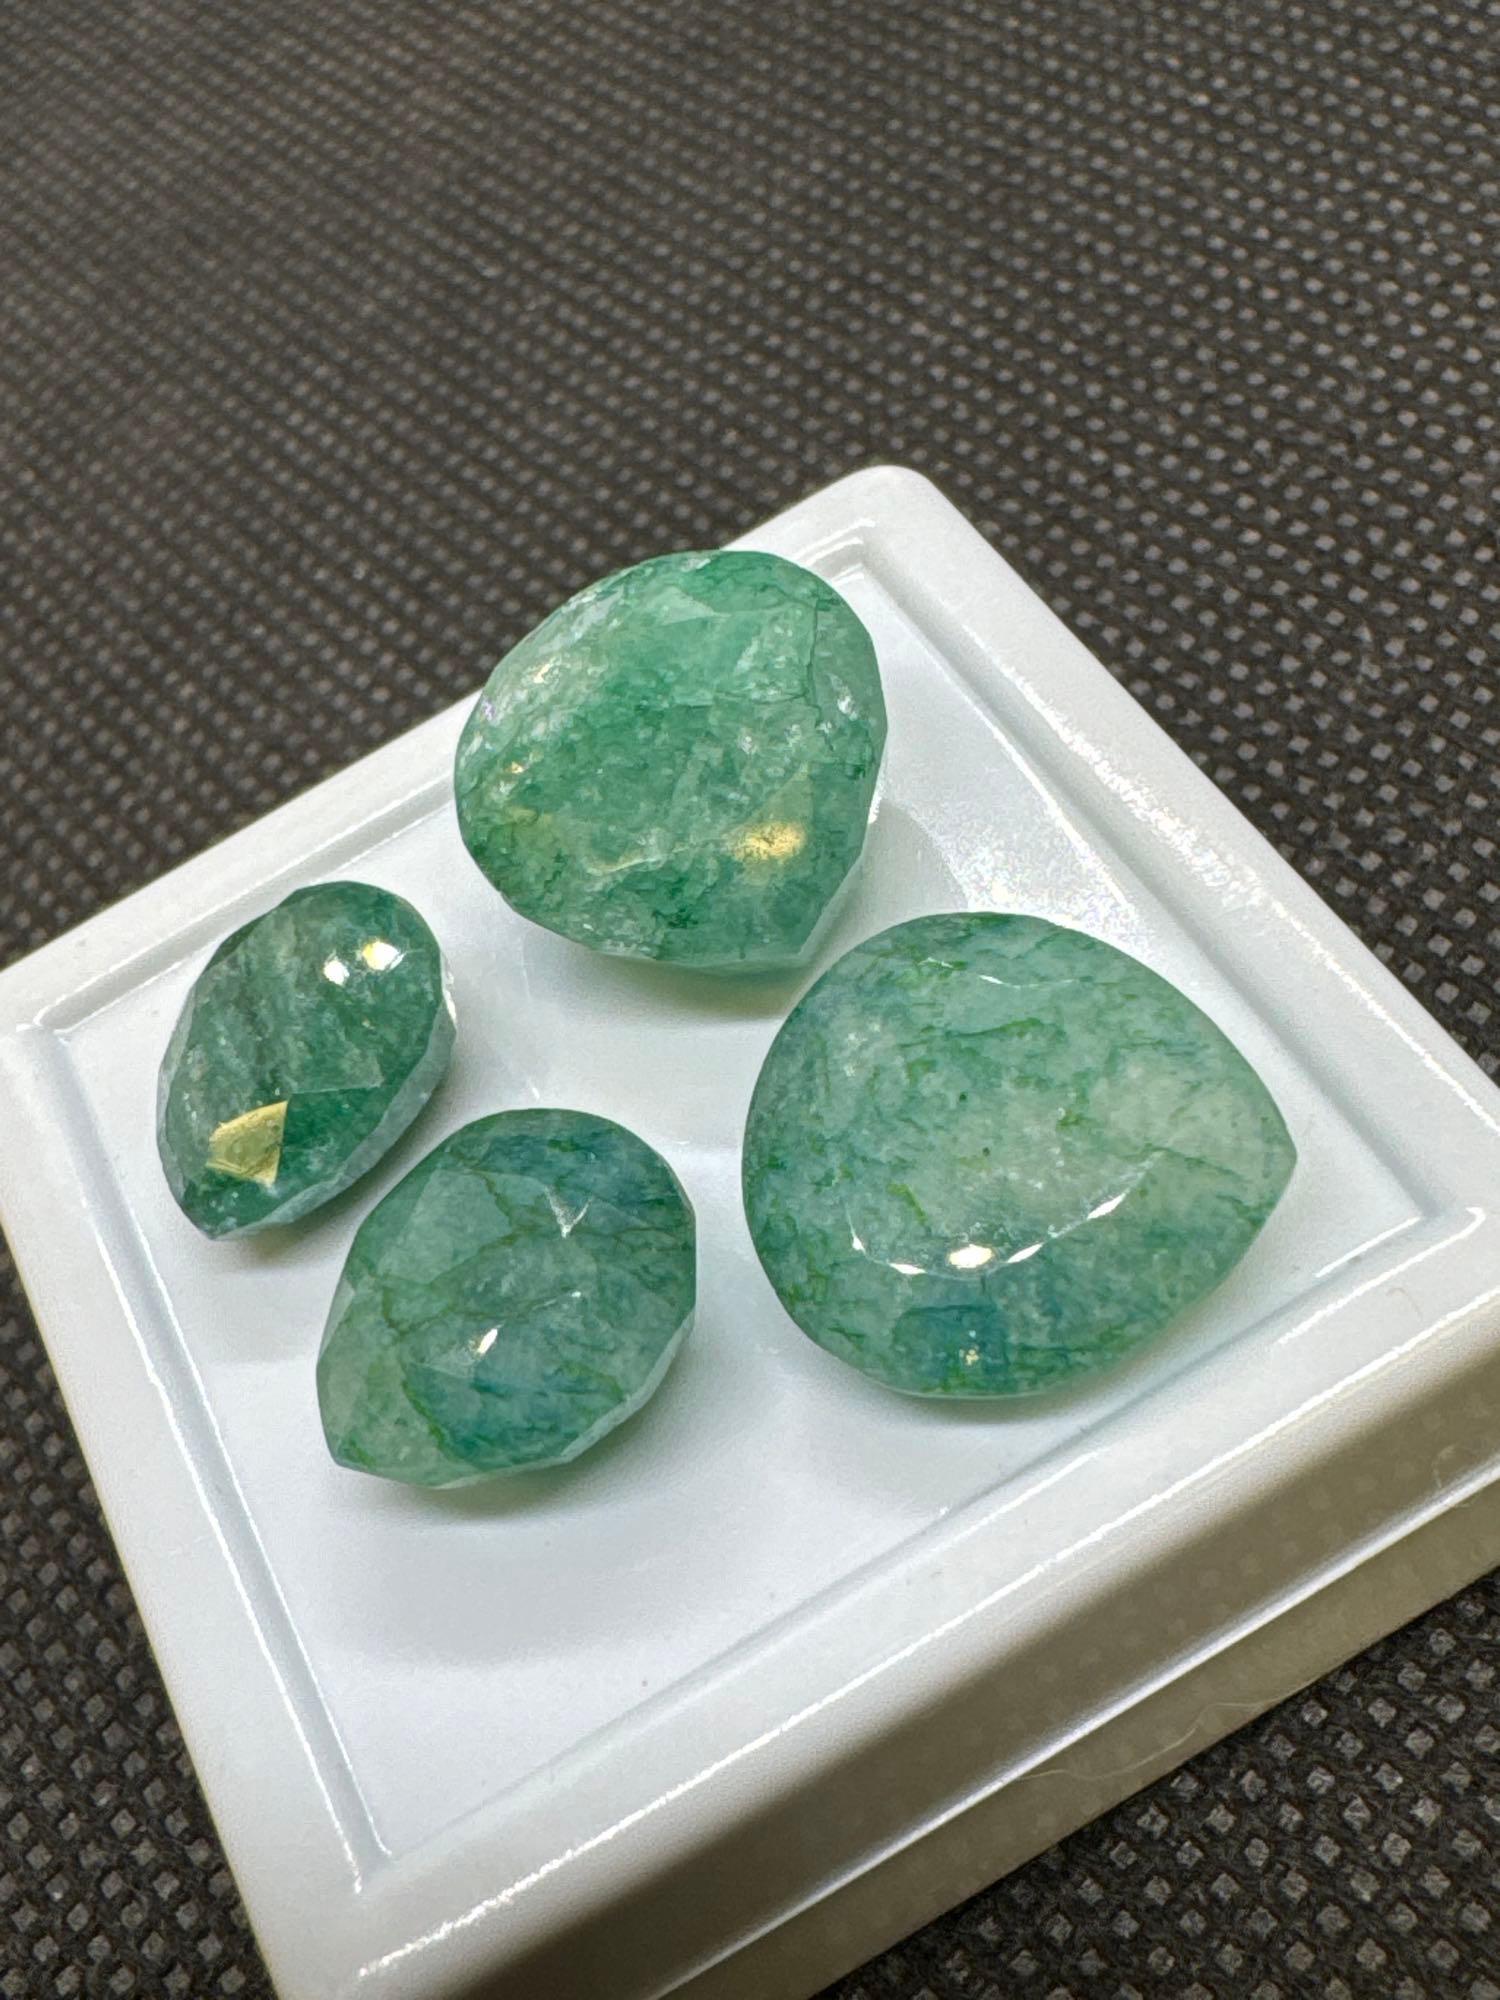 4x Green Pair Cut Emerald Gemstones 28.95Ct